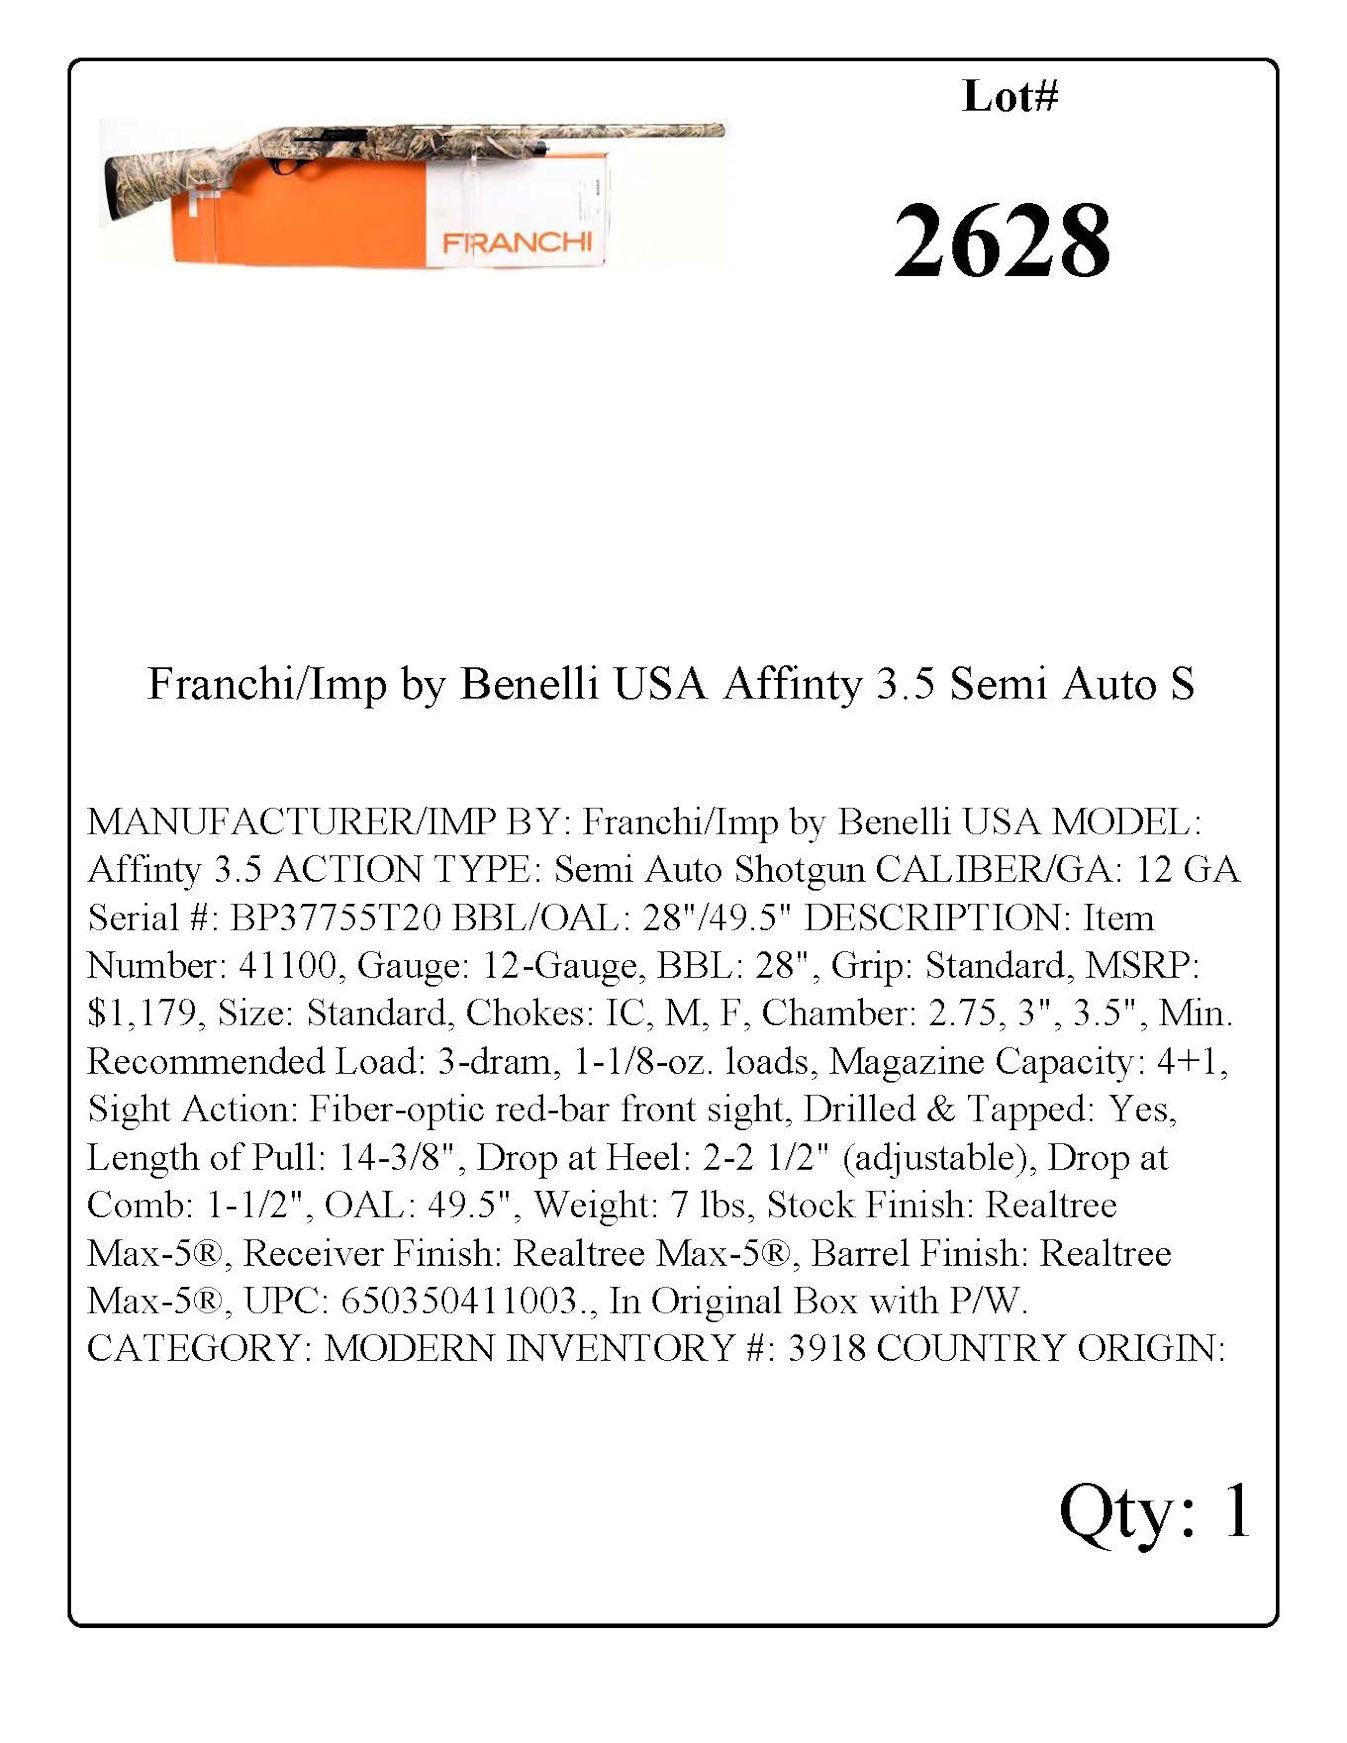 Franchi/Imp by Benelli USA Affinity 3.5 Semi Auto Shotgun